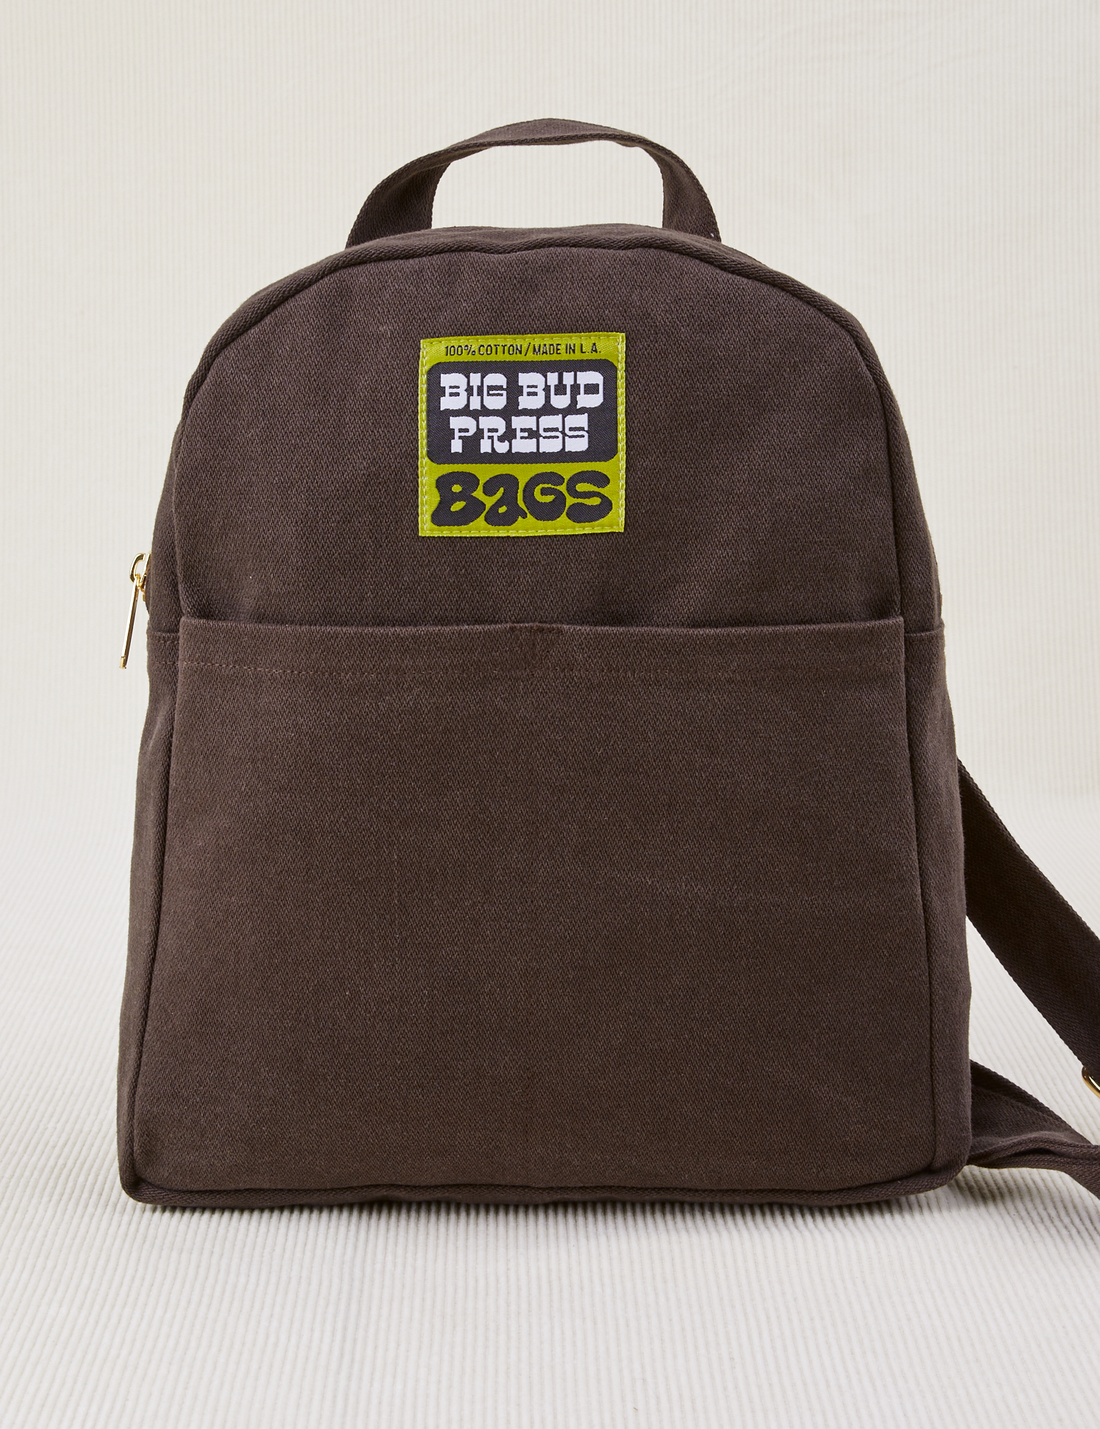 Mini Backpack in Espresso Brown